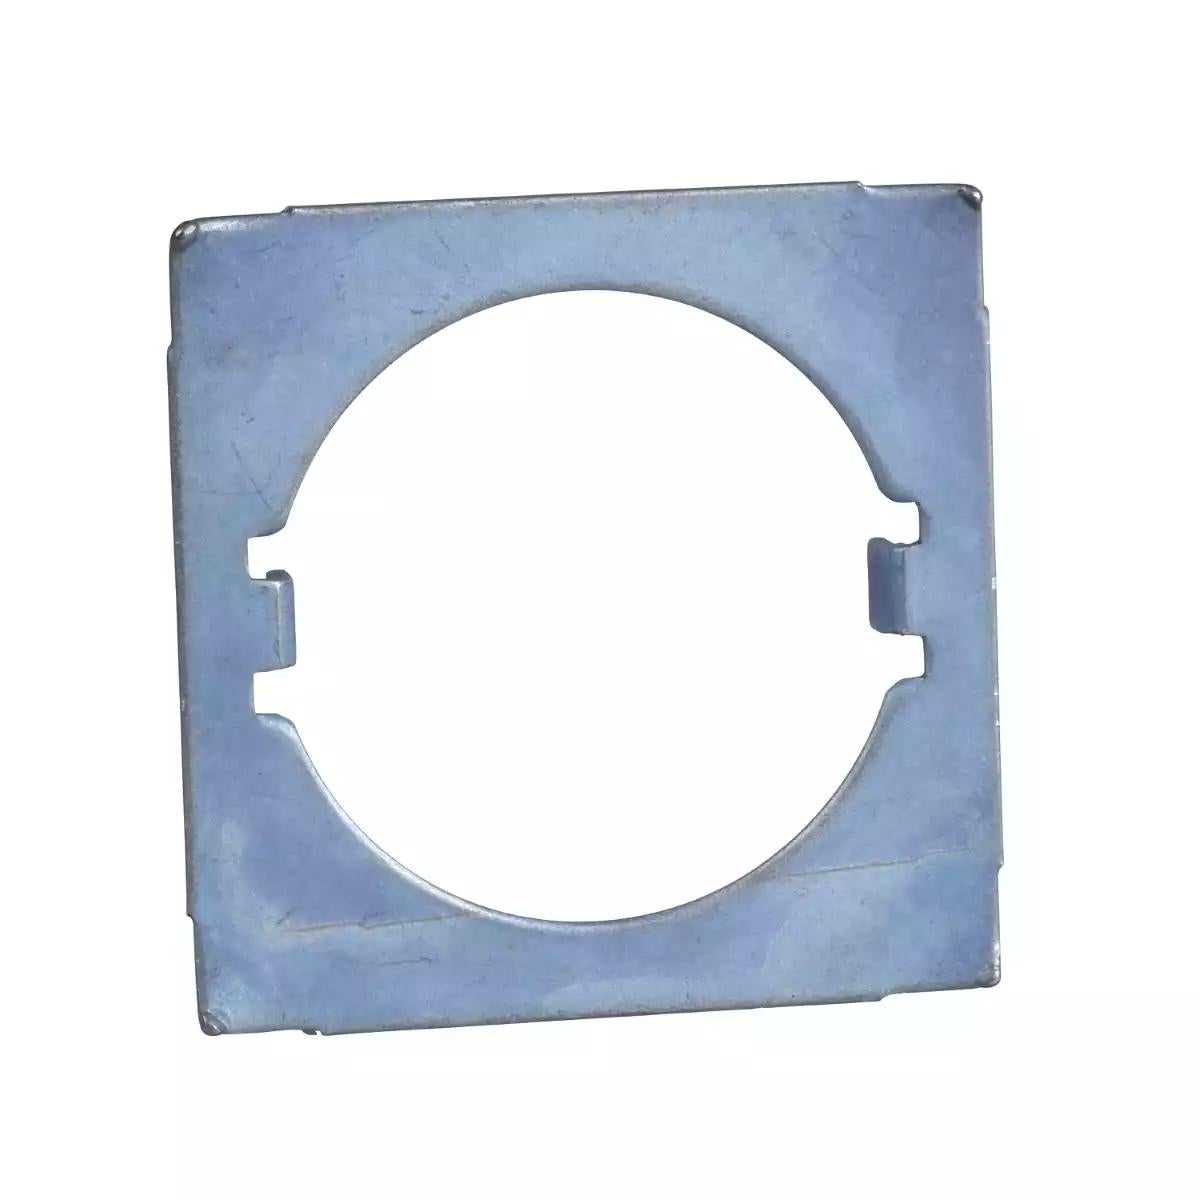 Anti-rotation plate for Ø22 head, metal